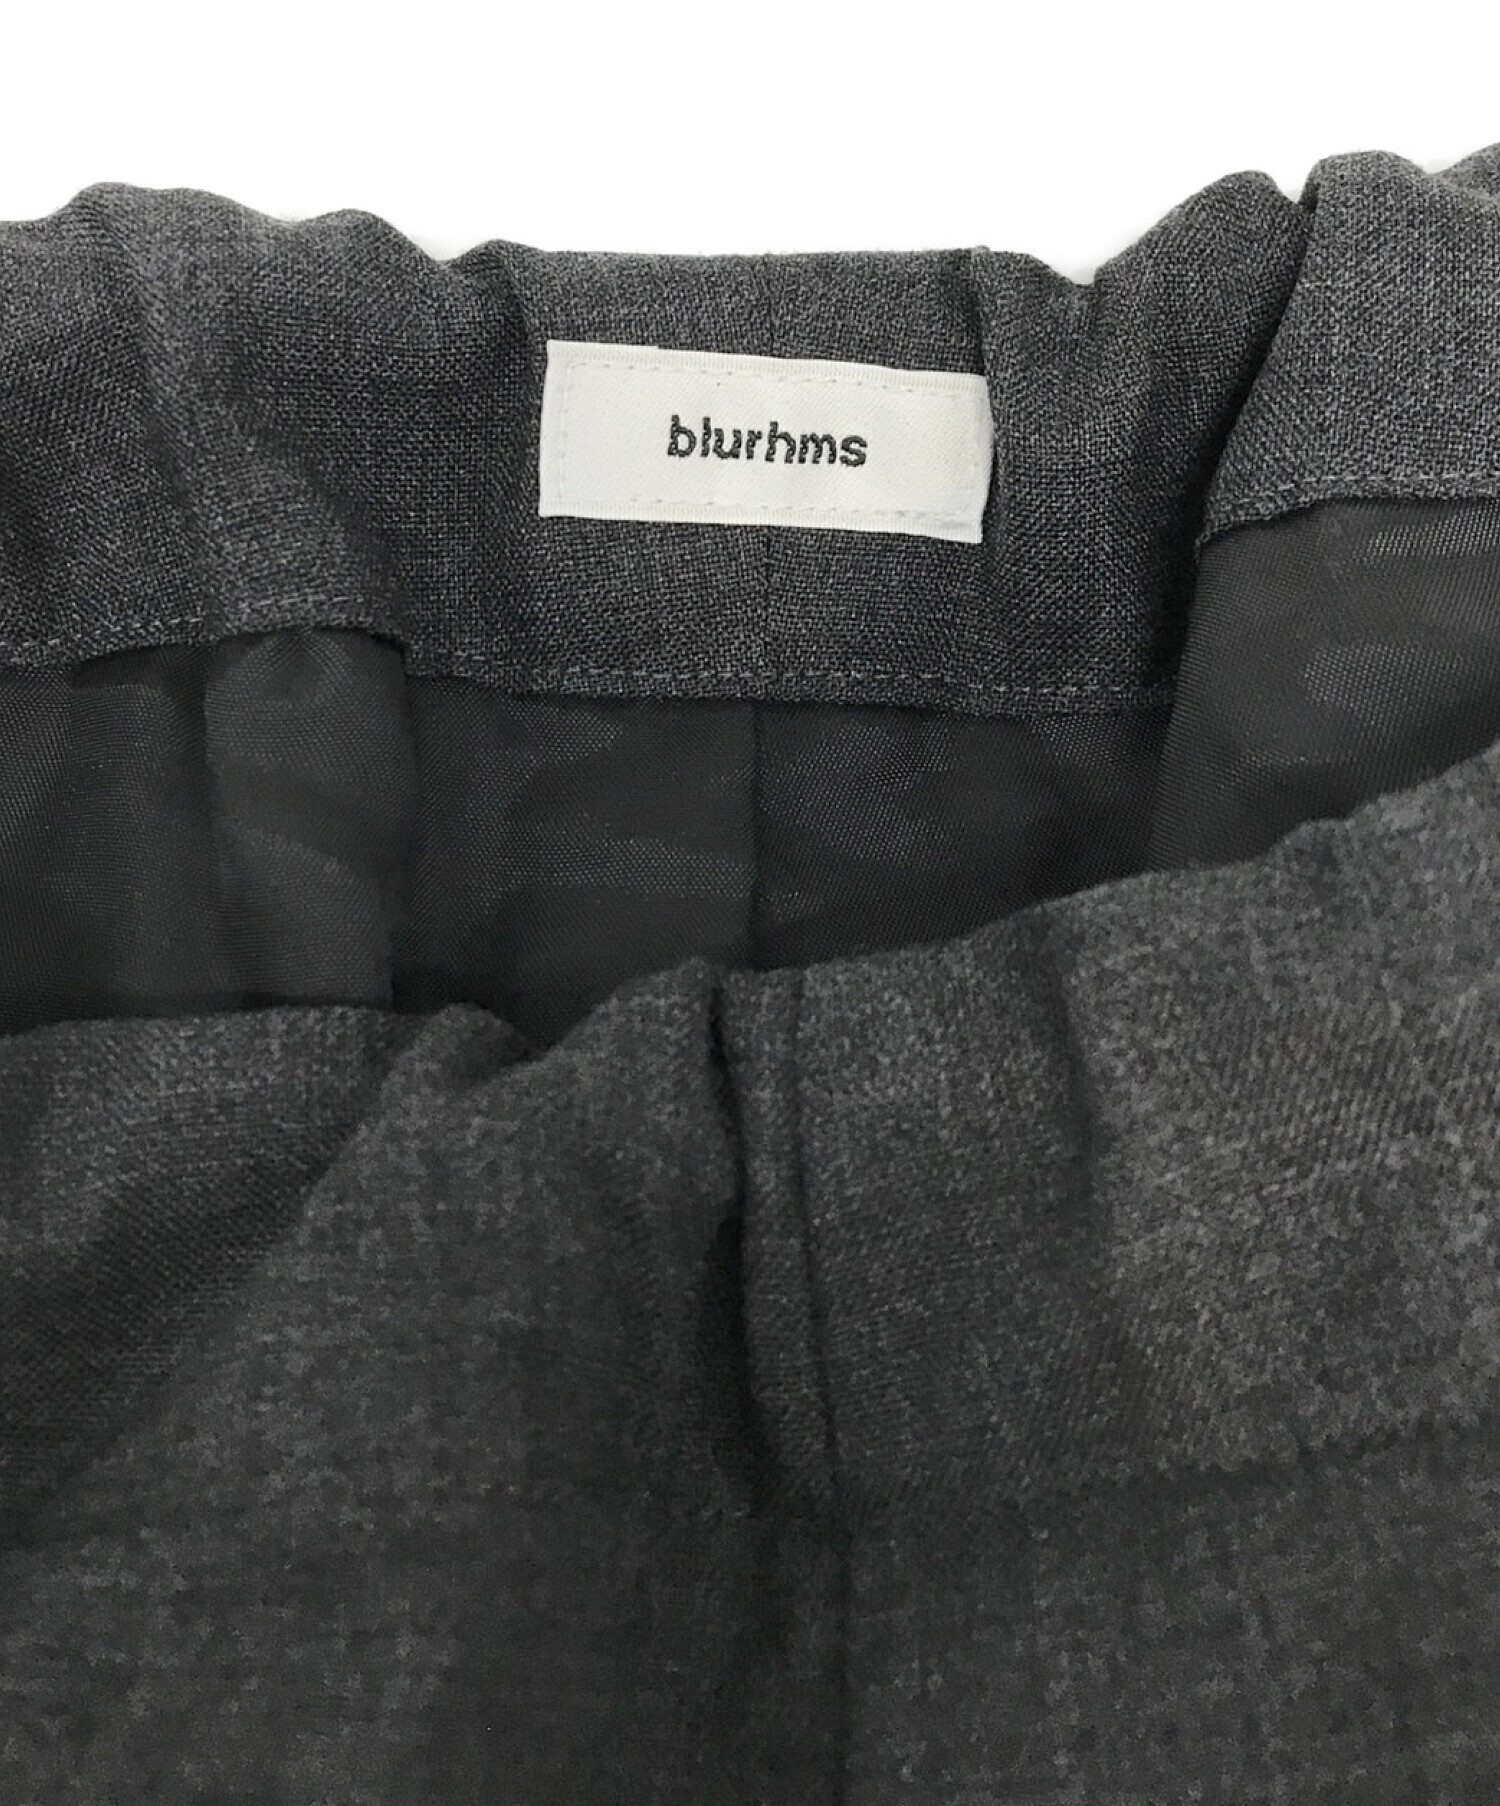 BLURHMS (ブラームス) Tropical Wool Side String Slacks（トロピカルウールサイドストリングスラックス） グレー  サイズ:SIZE 3